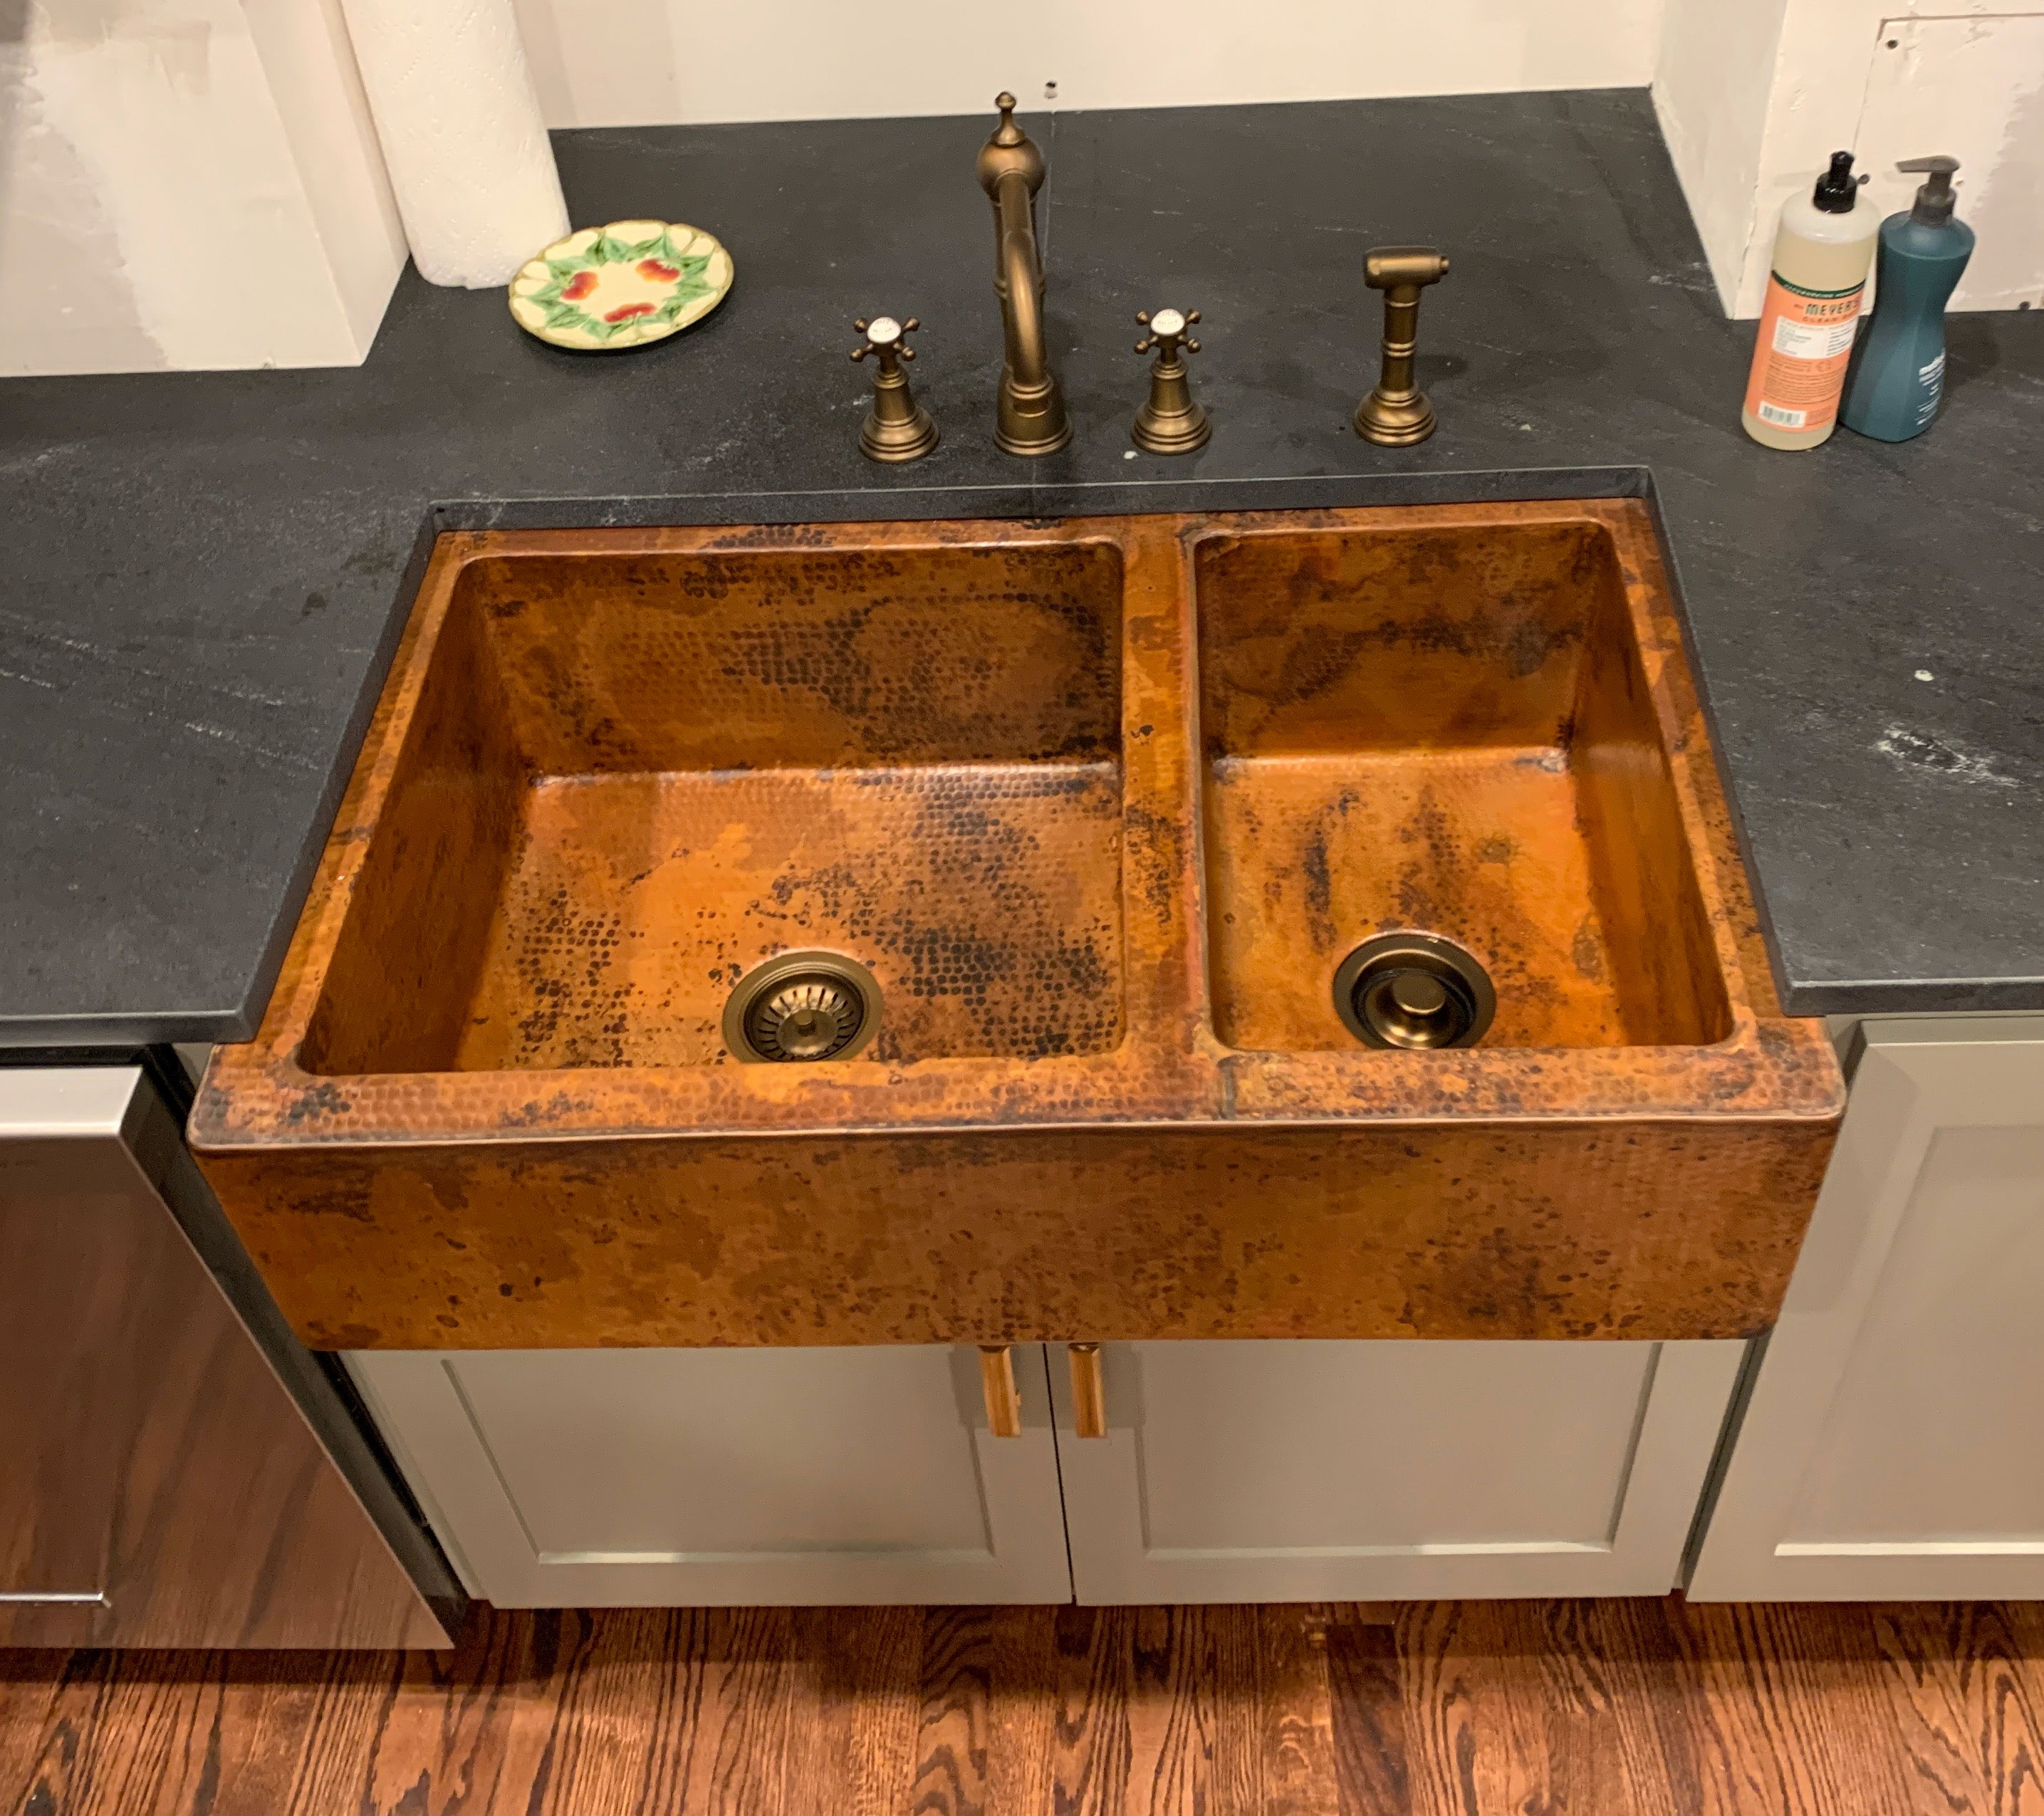 Osm kitchen design with kitchen sink idea, white kitchen cabinets and black kitchen countertops brick backsplash